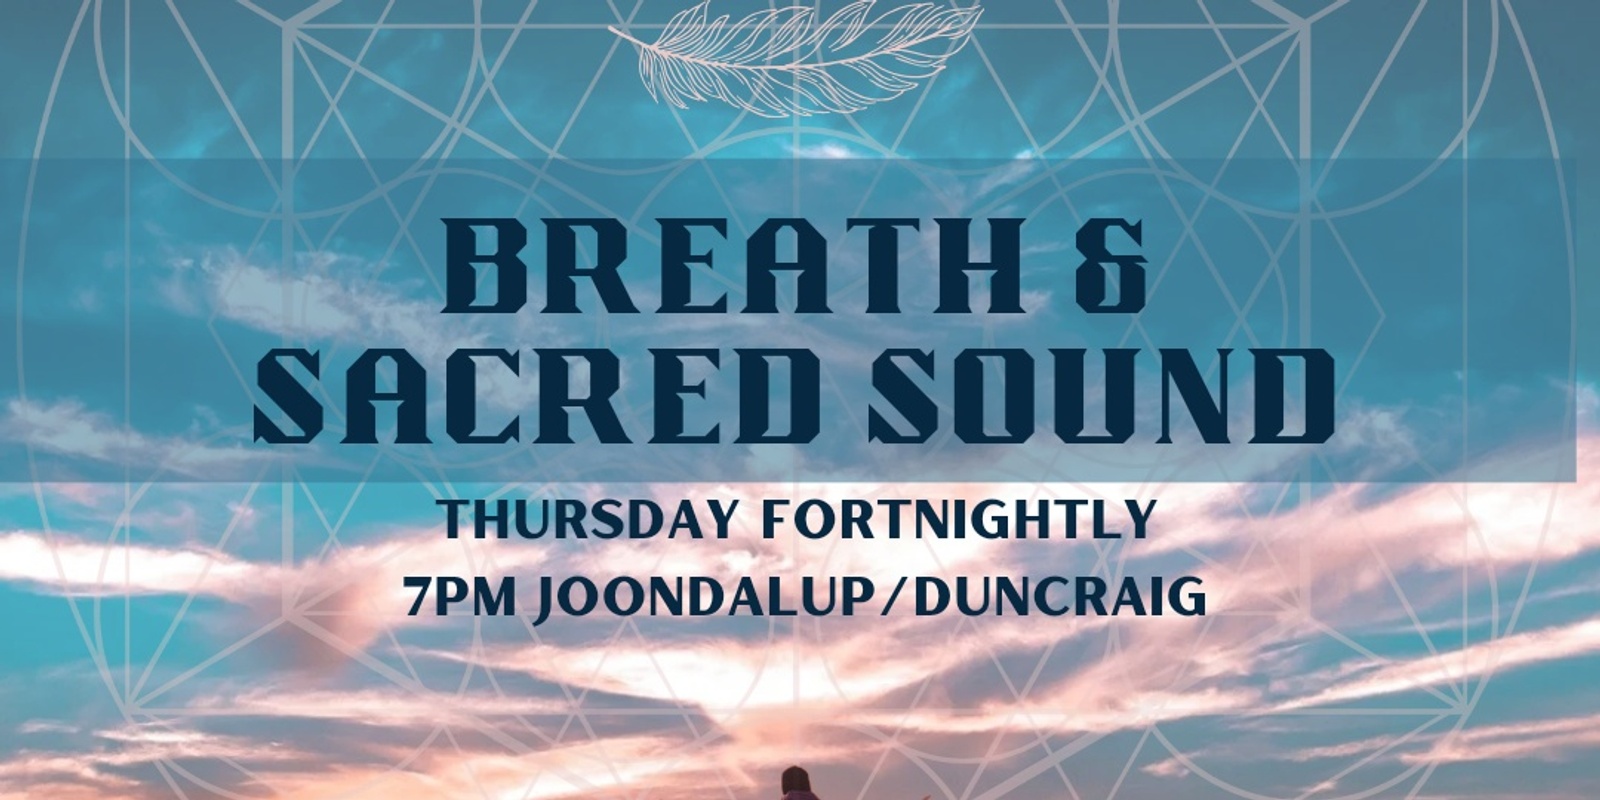 Banner image for BREATH & SACRED SOUNDS 